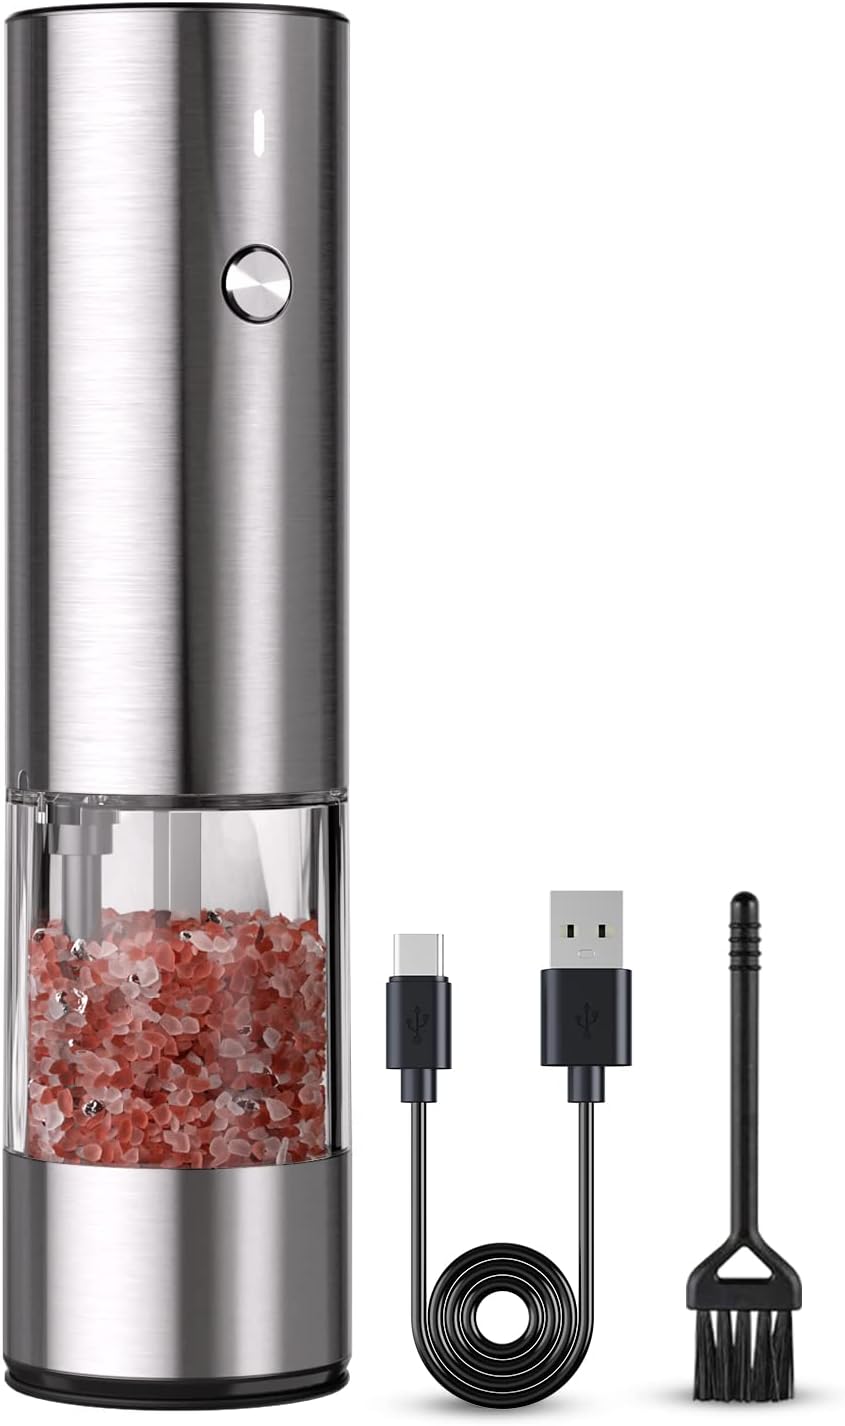 Usb Rechargeable Electric Salt And Pepper Grinder Set, Stainless Steel Pepper  Grinder Refillable,adjustable Coarseness